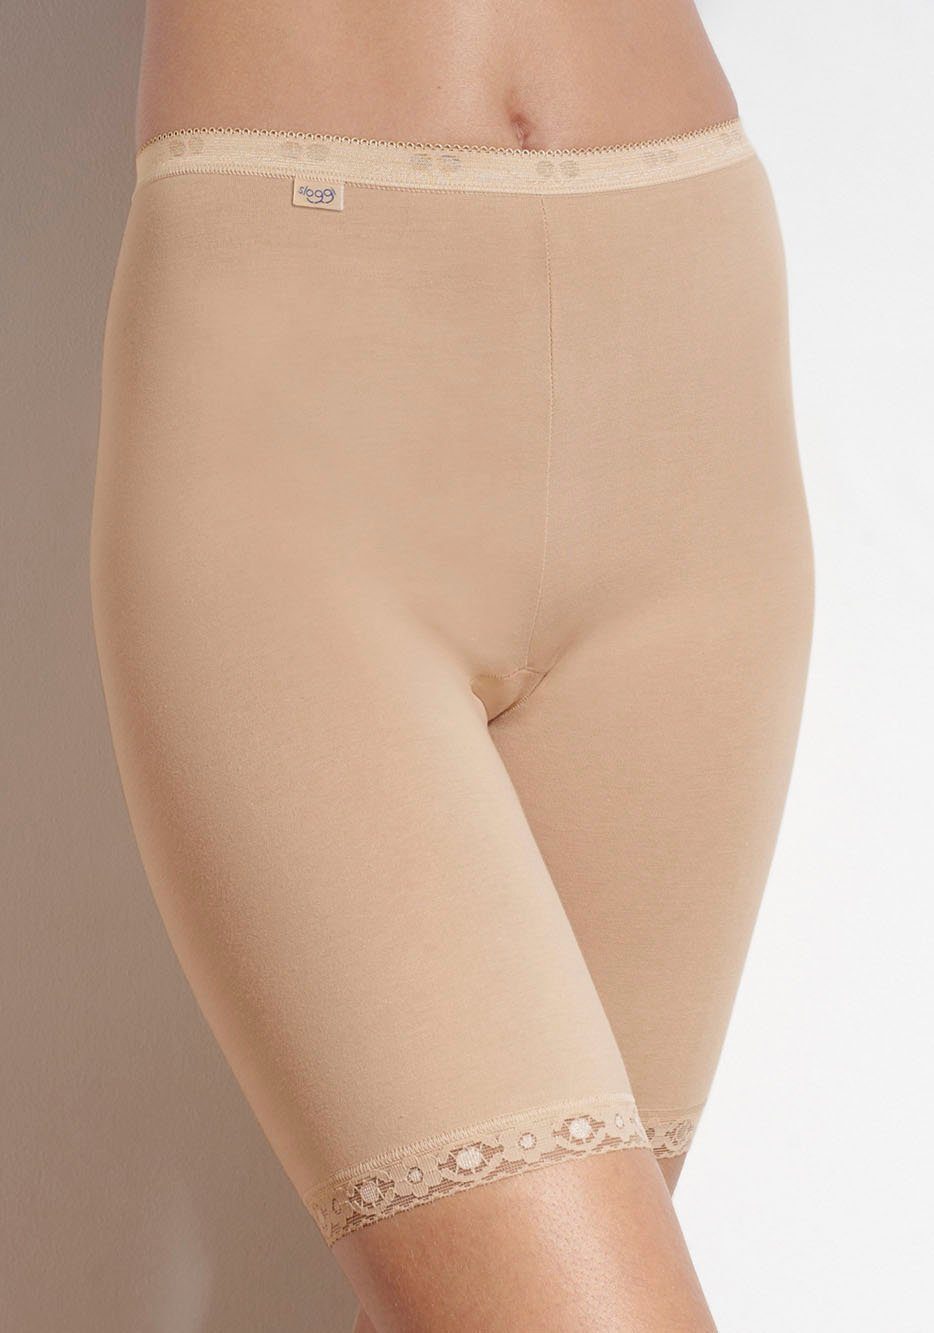 [100% Qualitätsgarantie] Sloggi Lange Unterhose Basic+ Longpants Spitzenbesatz natur mit